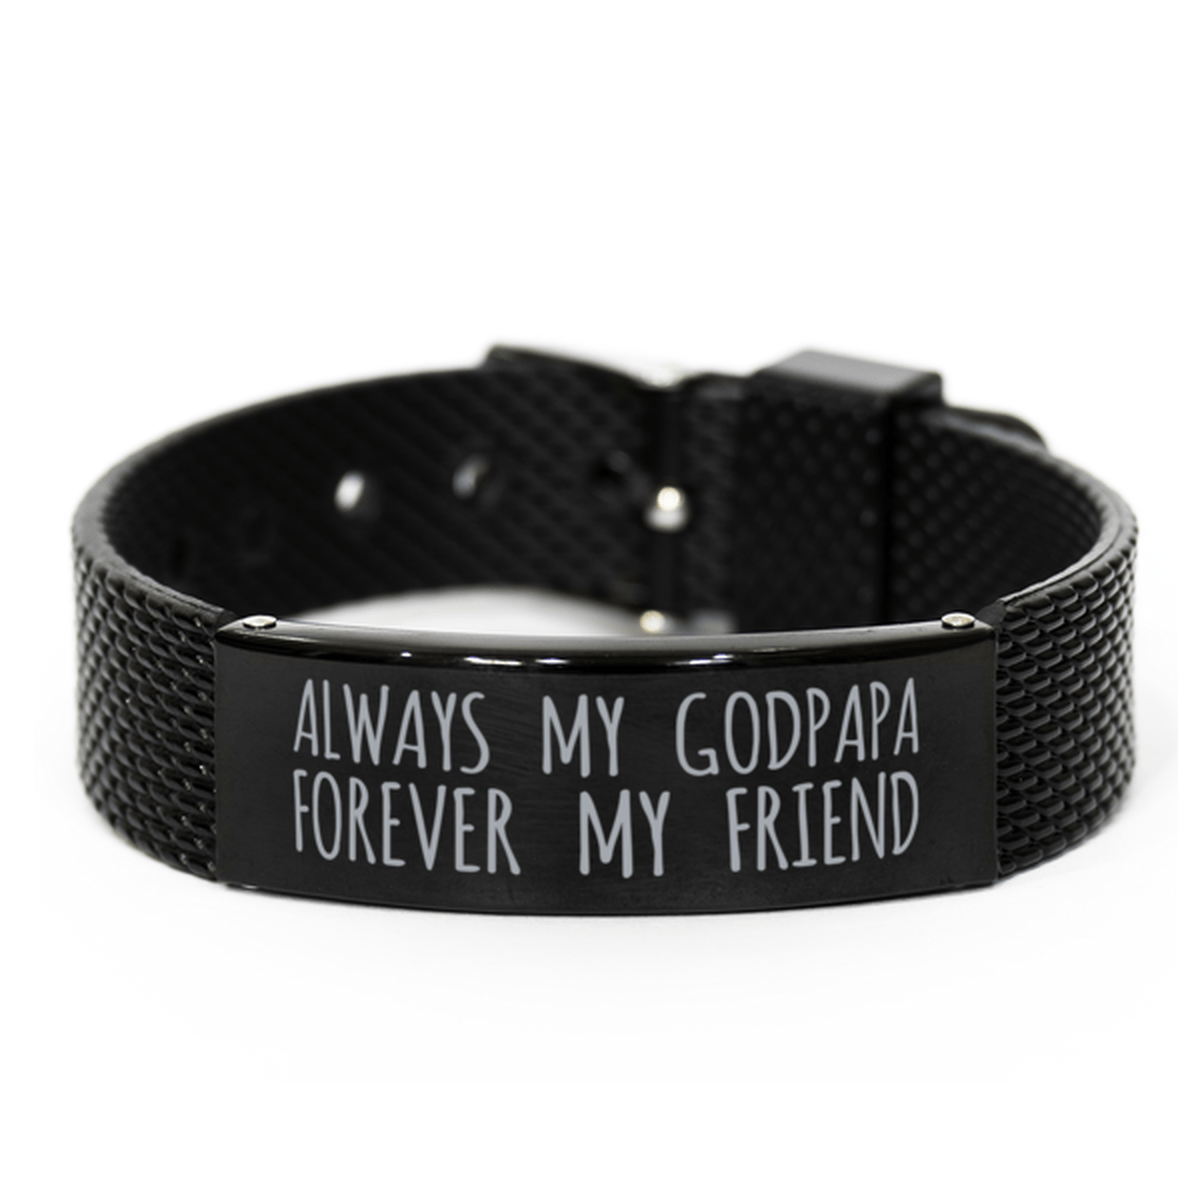 Inspirational Godpapa Black Shark Mesh Bracelet, Always My Godpapa Forever My Friend, Best Birthday Gifts for Family Friends